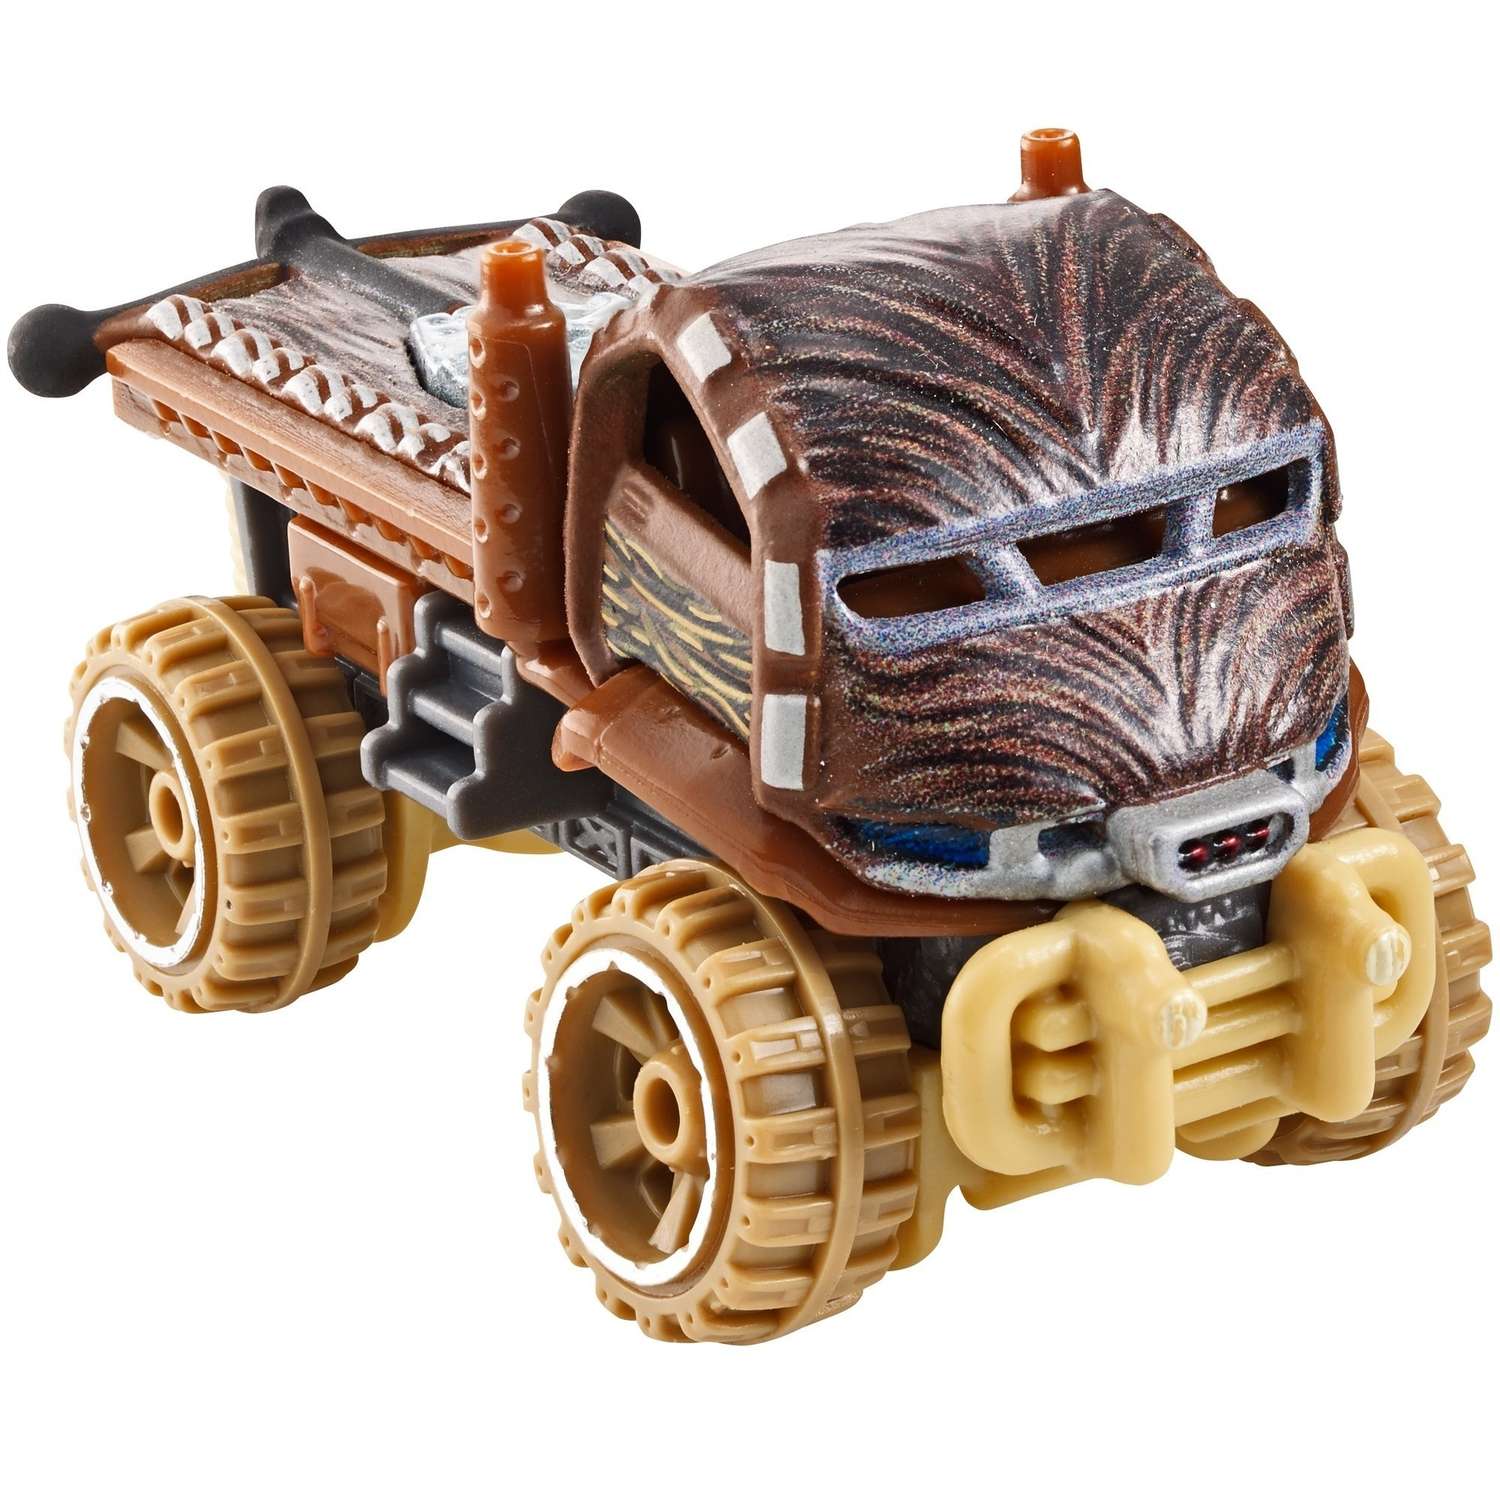 Машинки персонажей Hot Wheels Star Wars в ассортименте DXN83 - фото 5